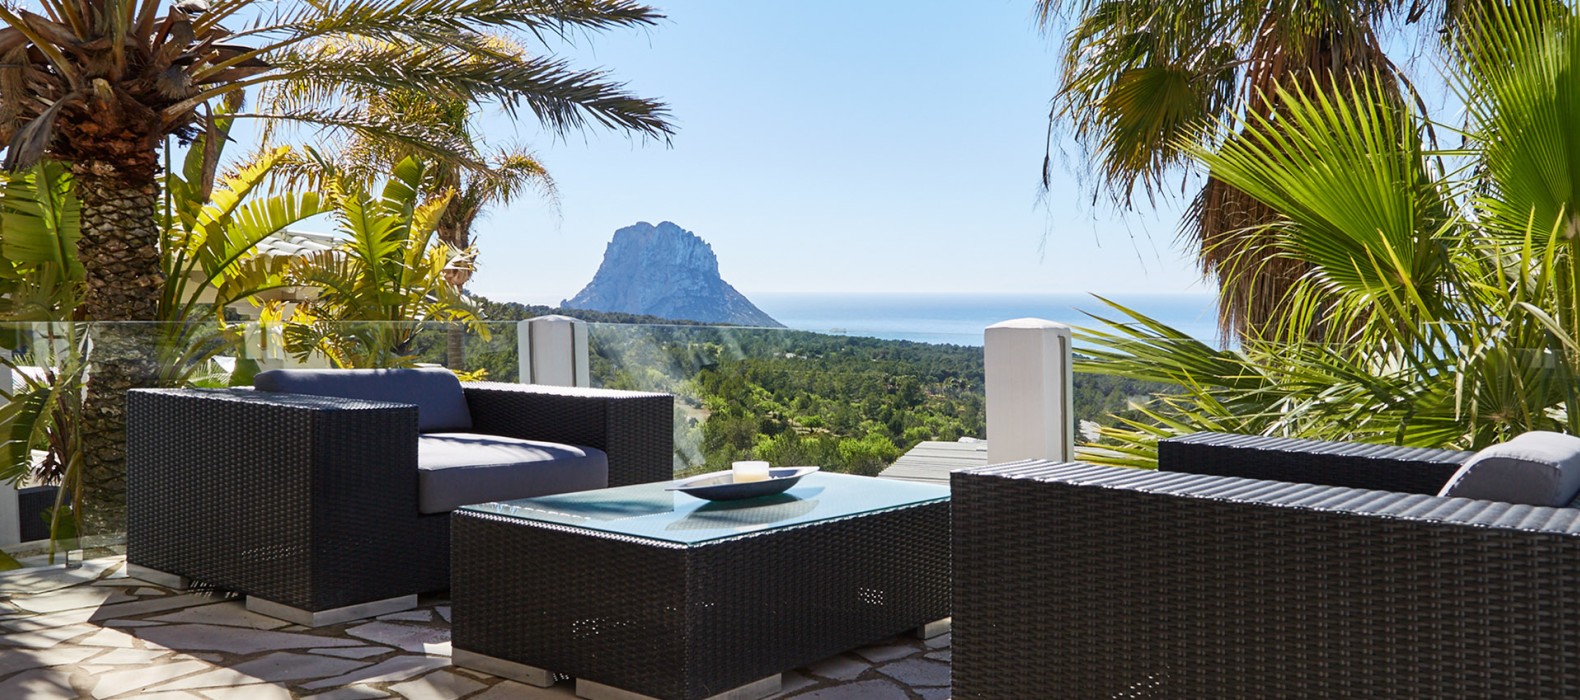 Exterior chill area with Es Vedra view of Villa Monterra in Ibiza